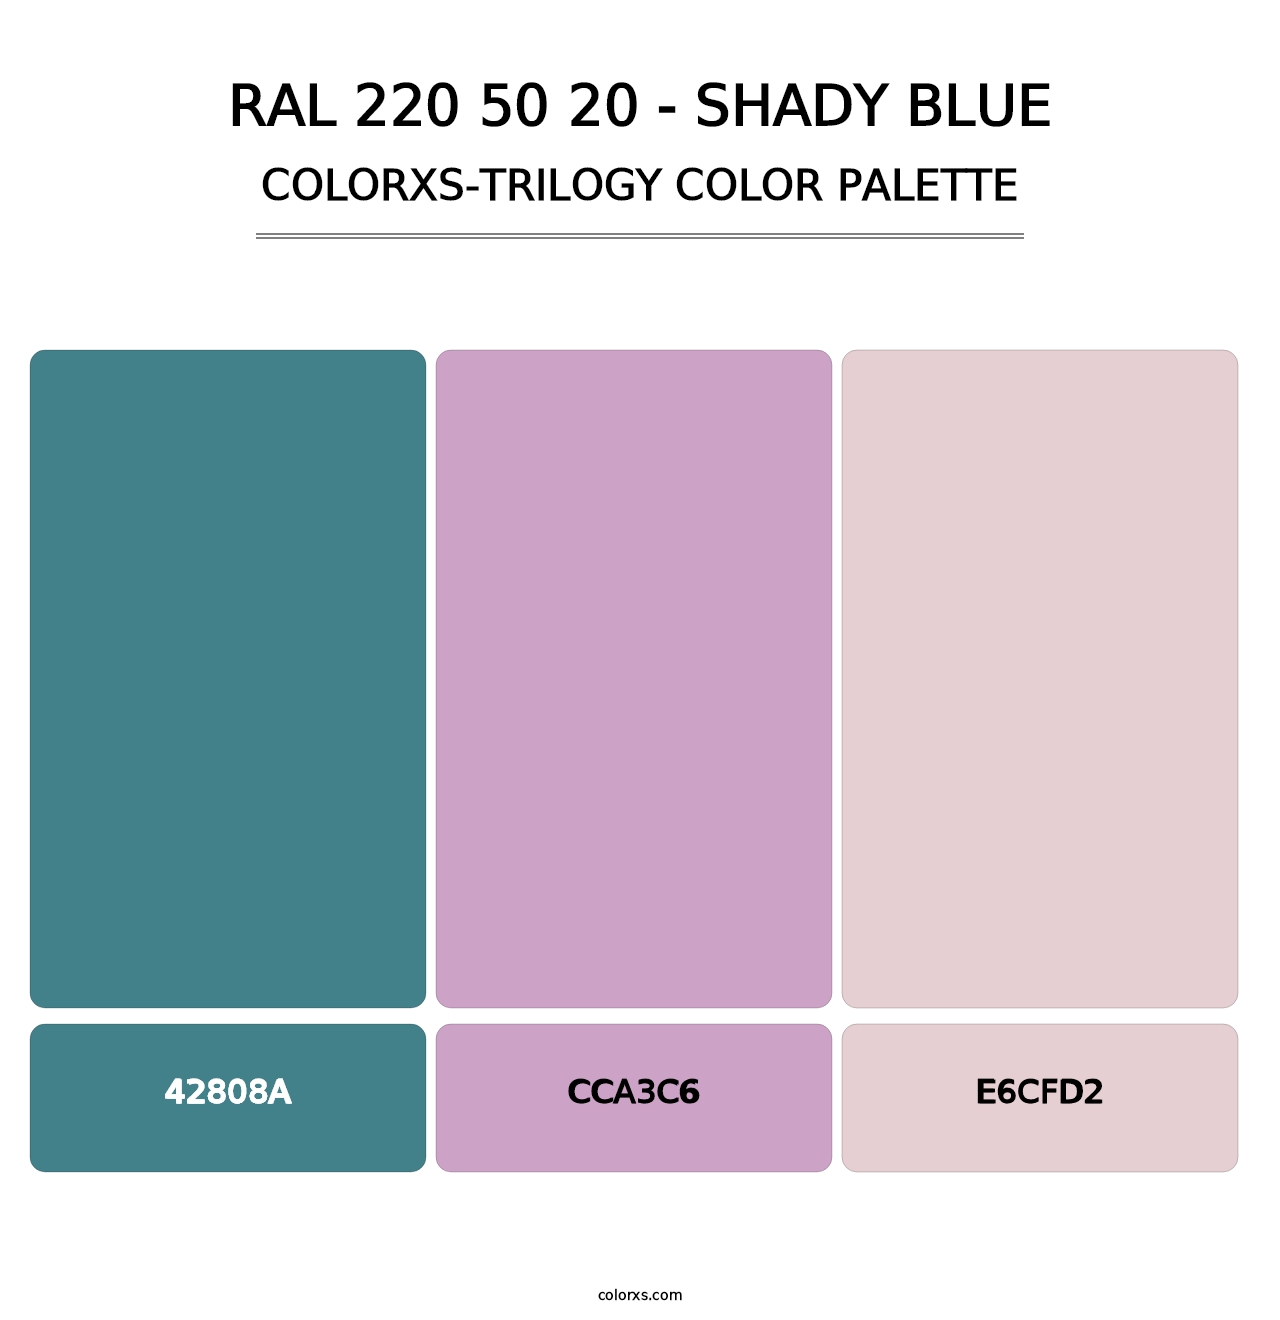 RAL 220 50 20 - Shady Blue - Colorxs Trilogy Palette